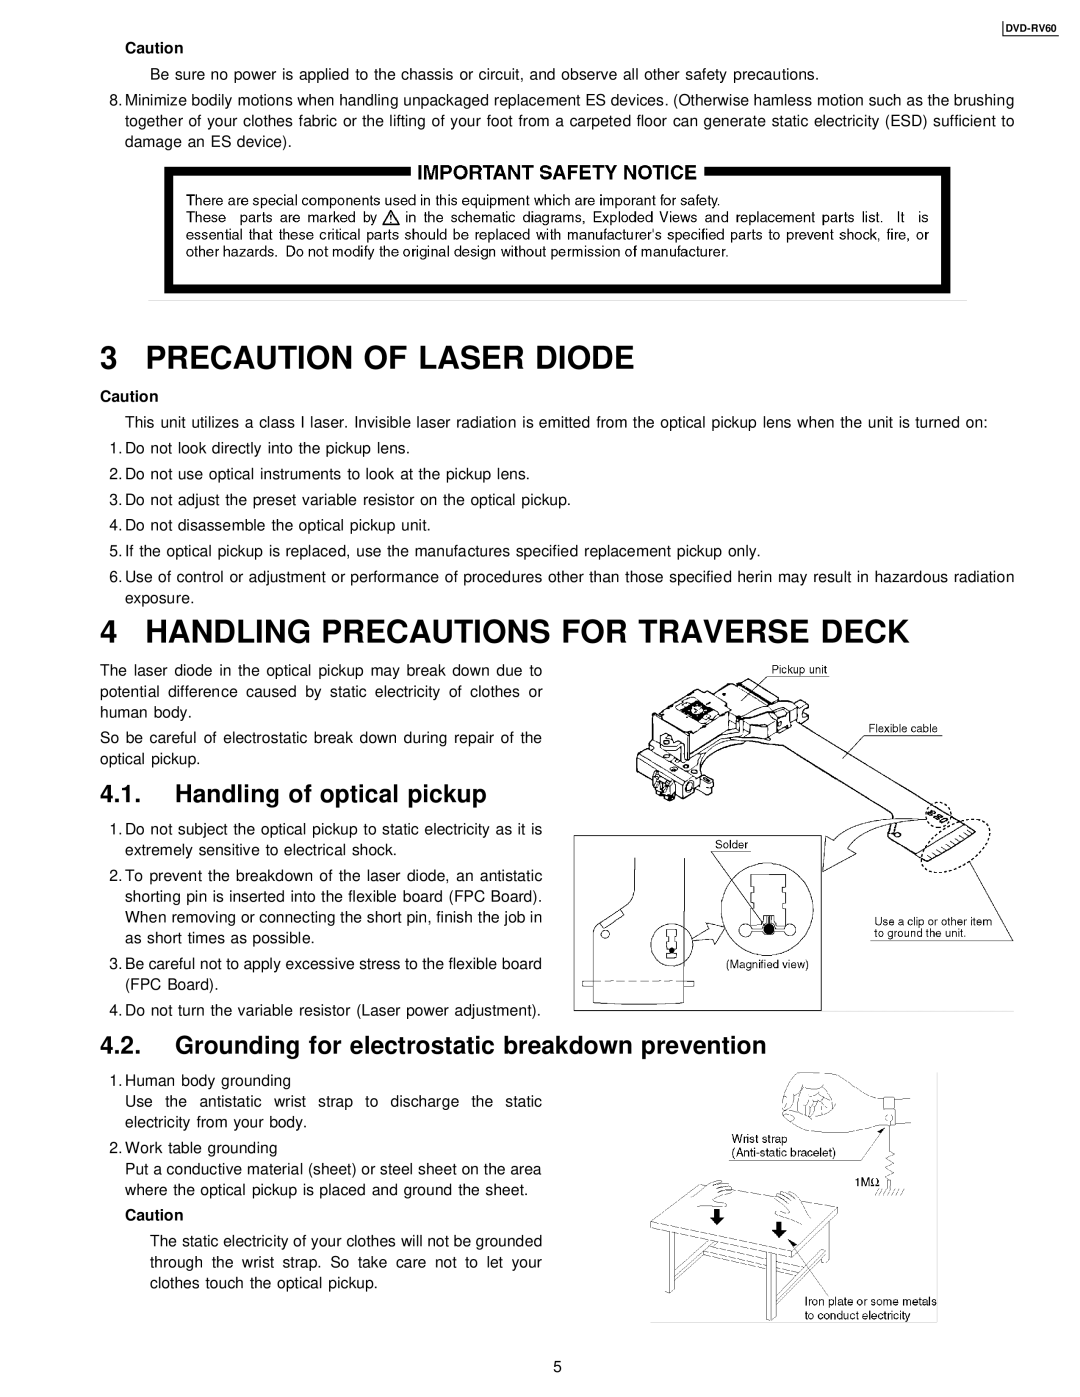 Panasonic DVDRV60 Precaution Of Laser Diode, Handling Precautions For Traverse Deck, Handling of optical pickup 